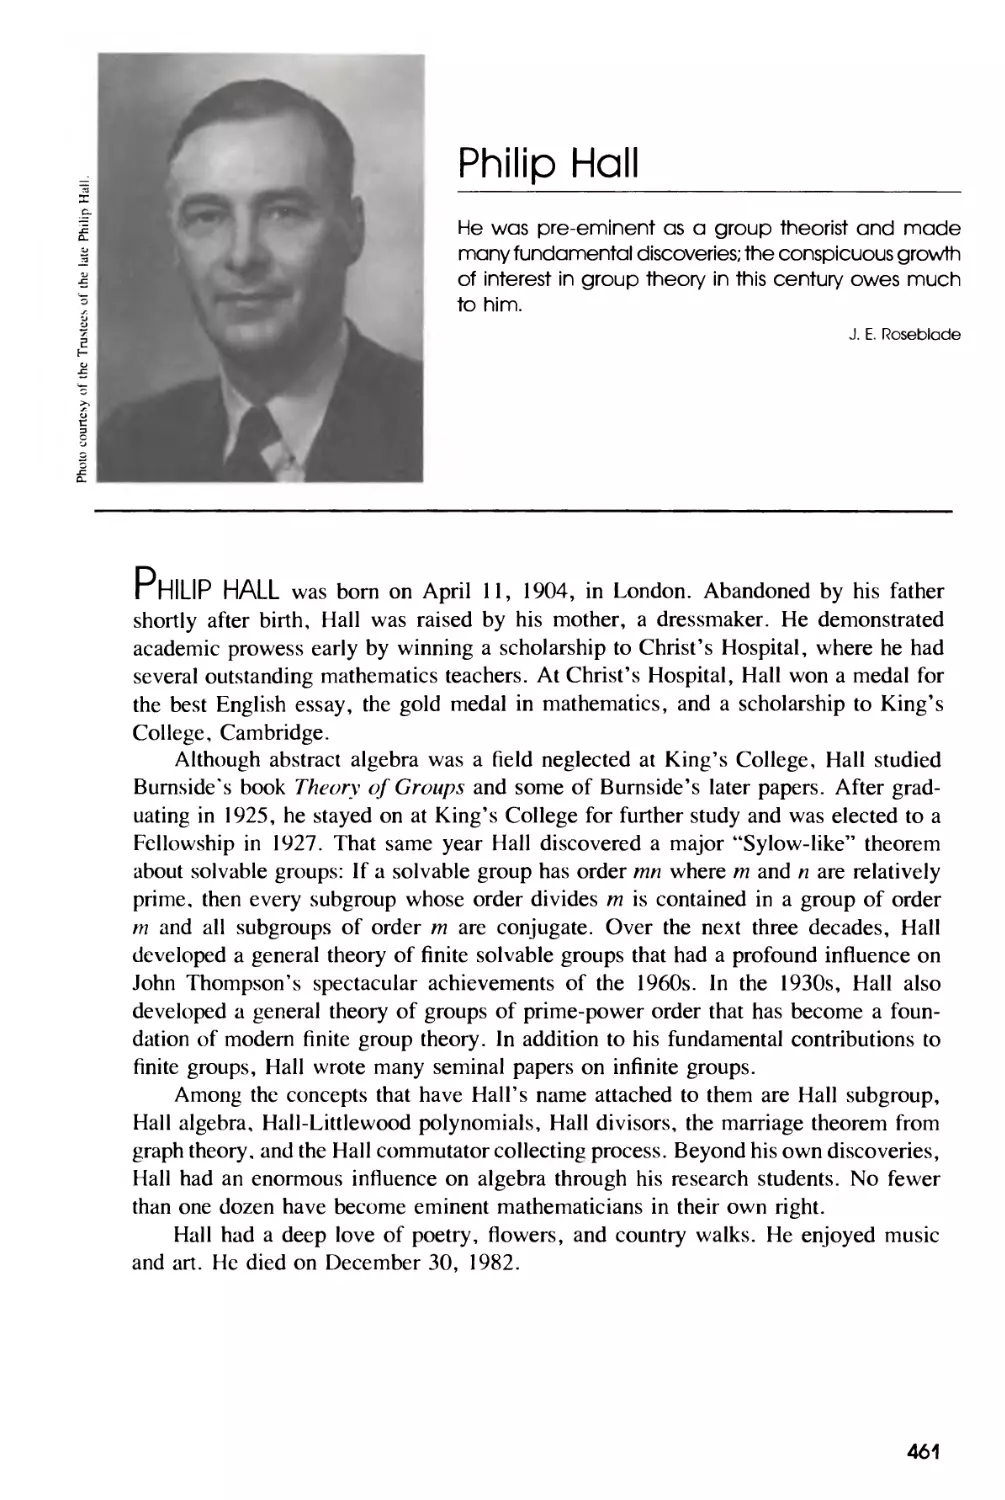 Biography of Philip Hall